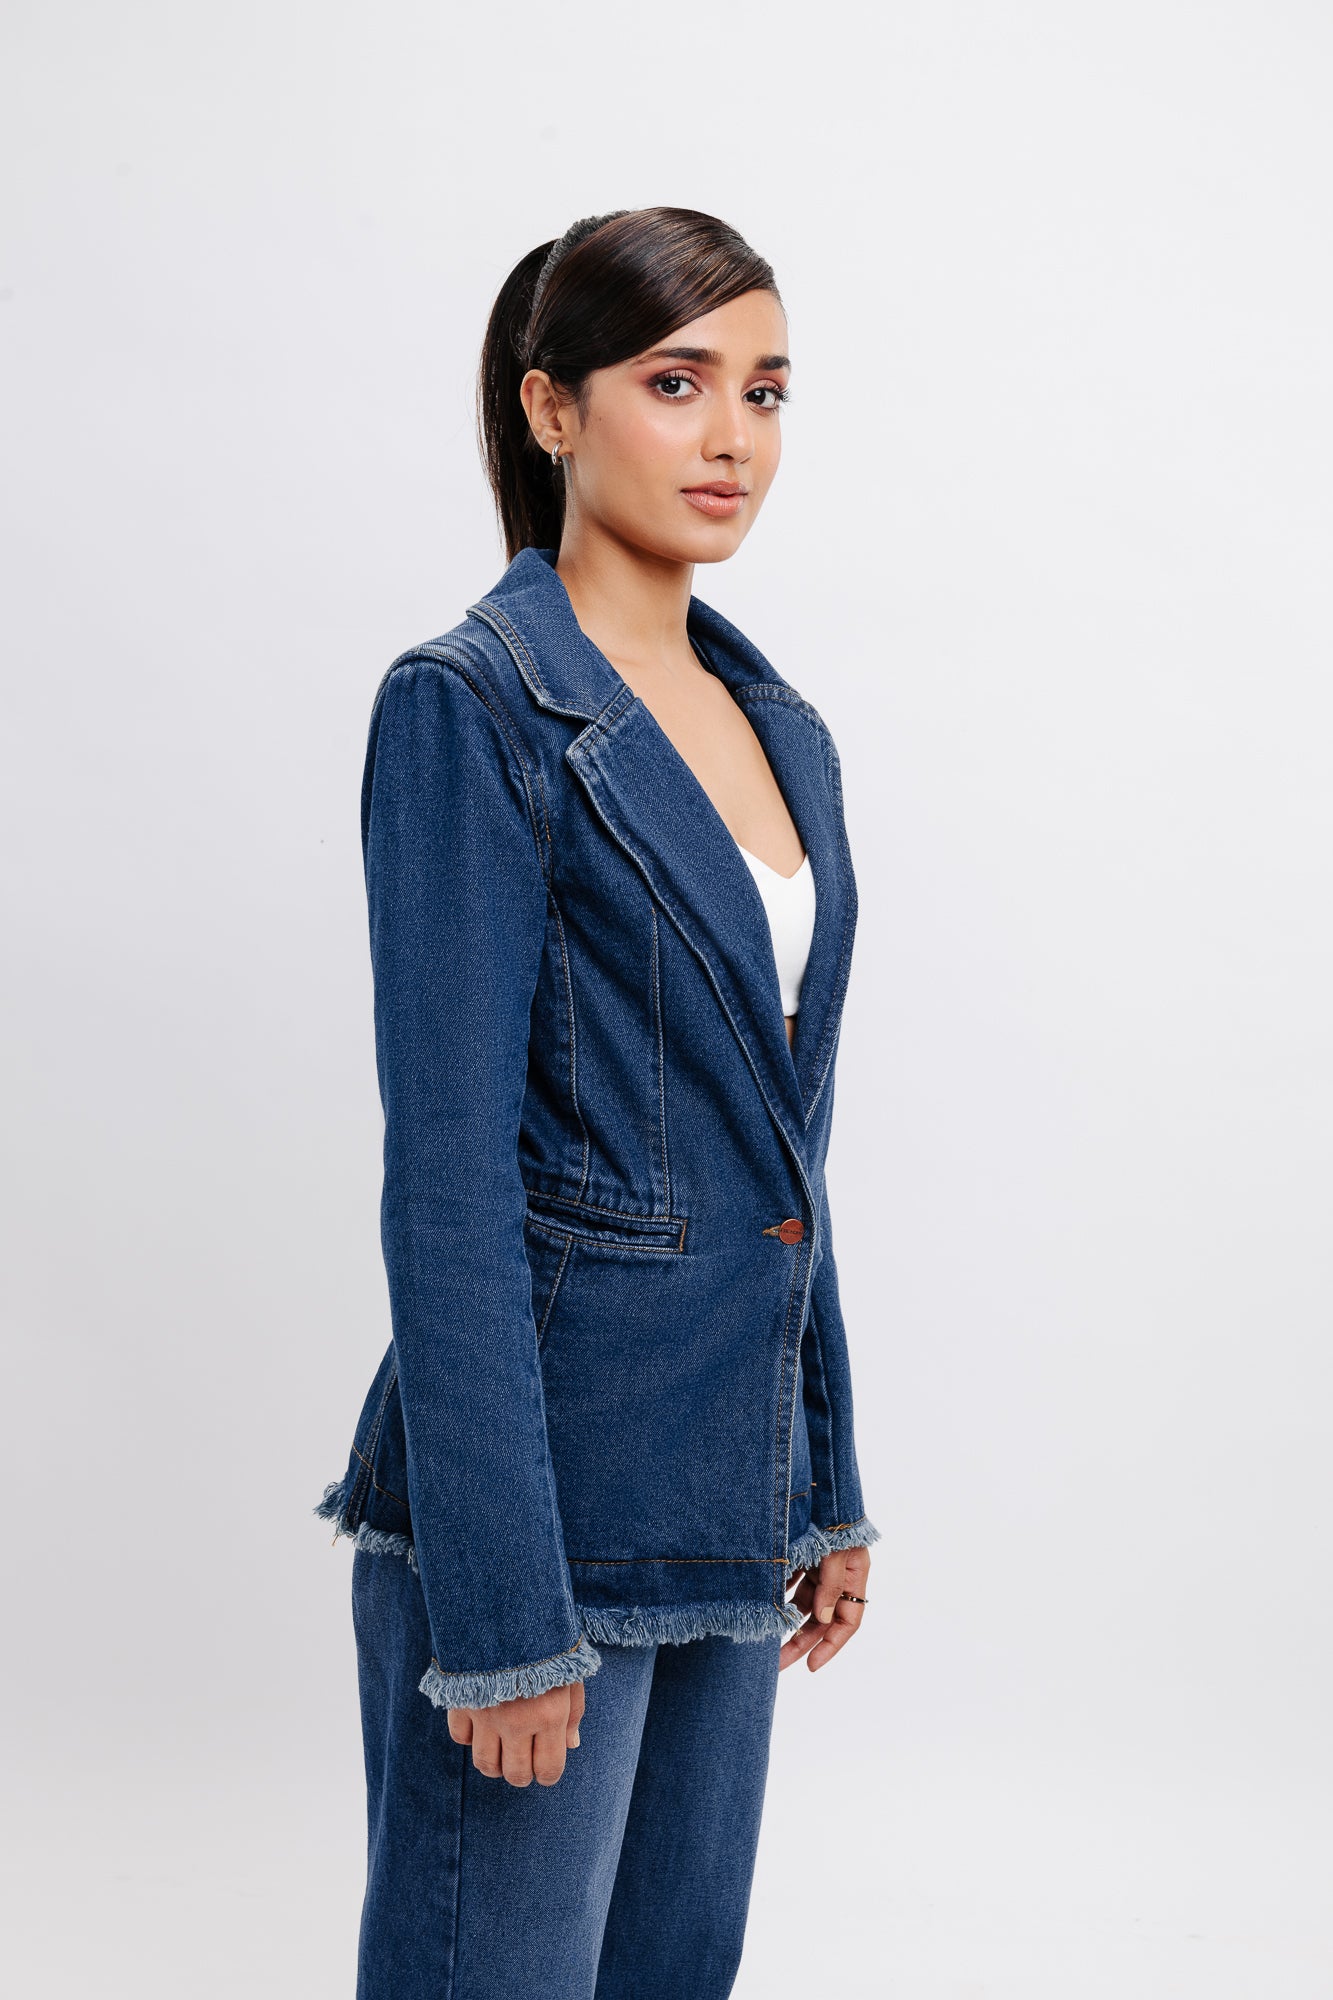 Buy Women Denim Jackets - Oversized, Cropped | Unisex Jacket - FREAKINS